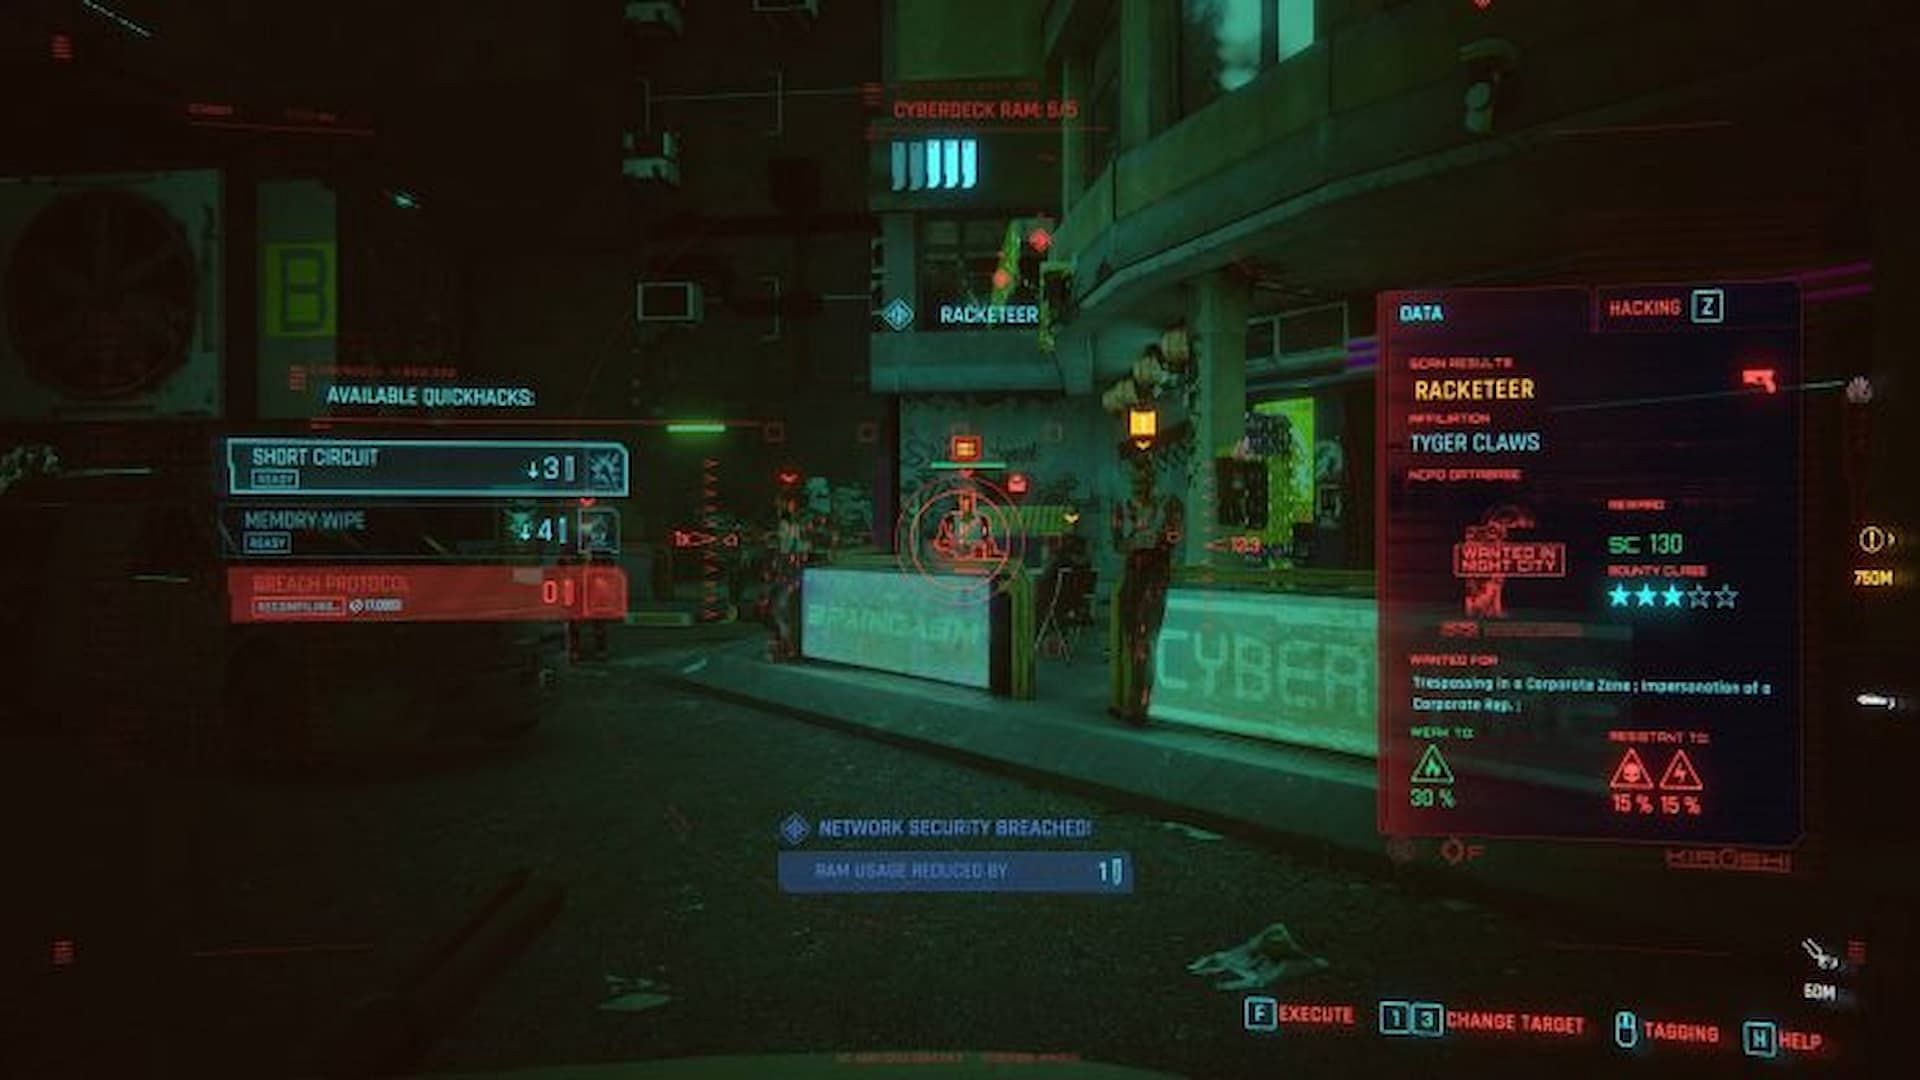 Short Circuit in Cyberpunk 2077 Phantom Liberty 2.0 (Image via CD Projekt Red)